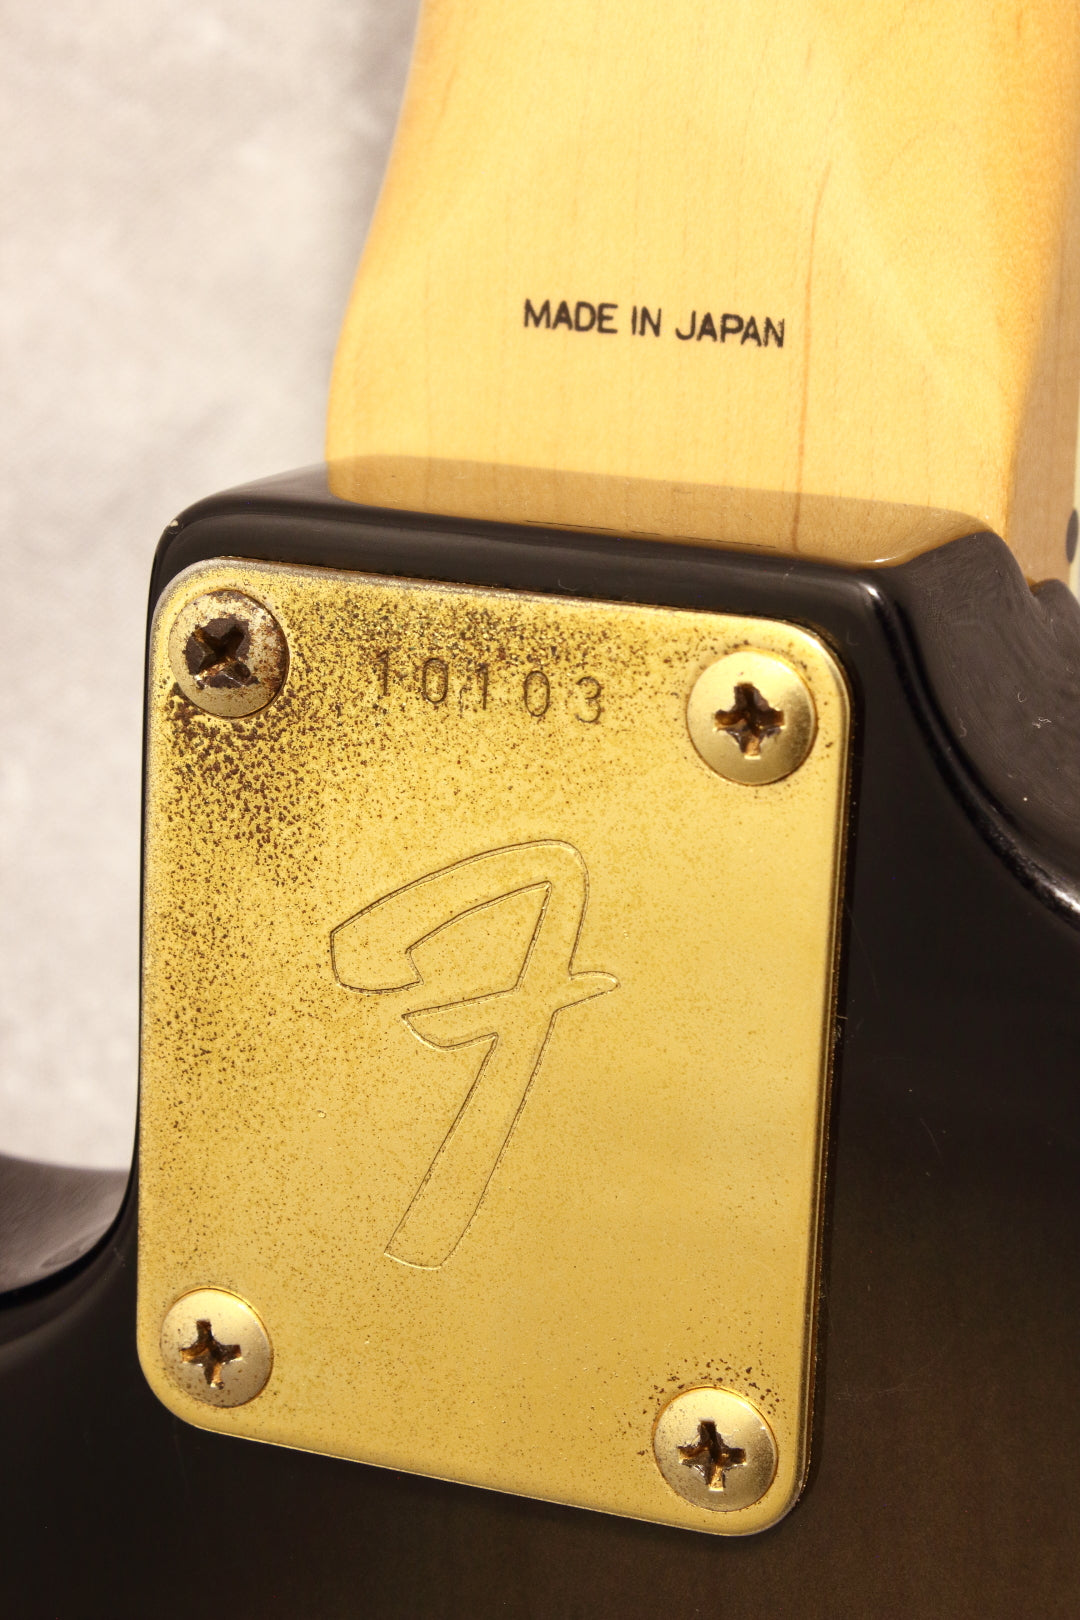 Fender Japan The Ventures Stratocaster ST-165VR Charcoal Burst 1996